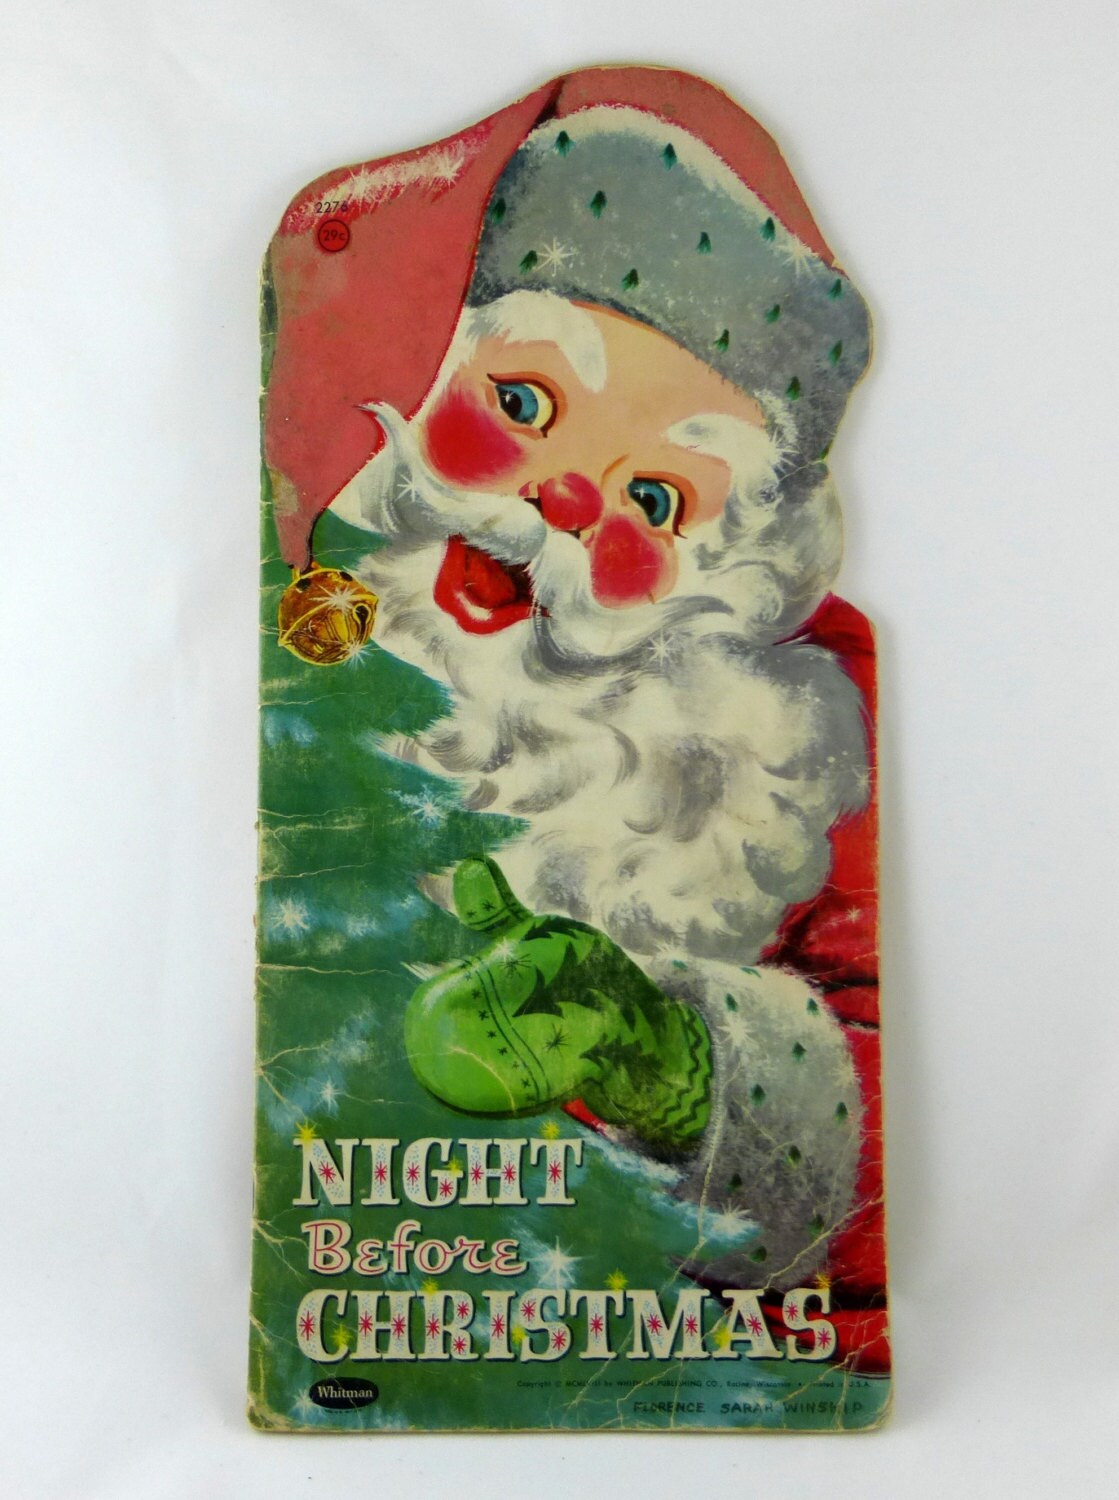 Night Before Christmas 1958 Whitman Large Die Cut Book1119 x 1500